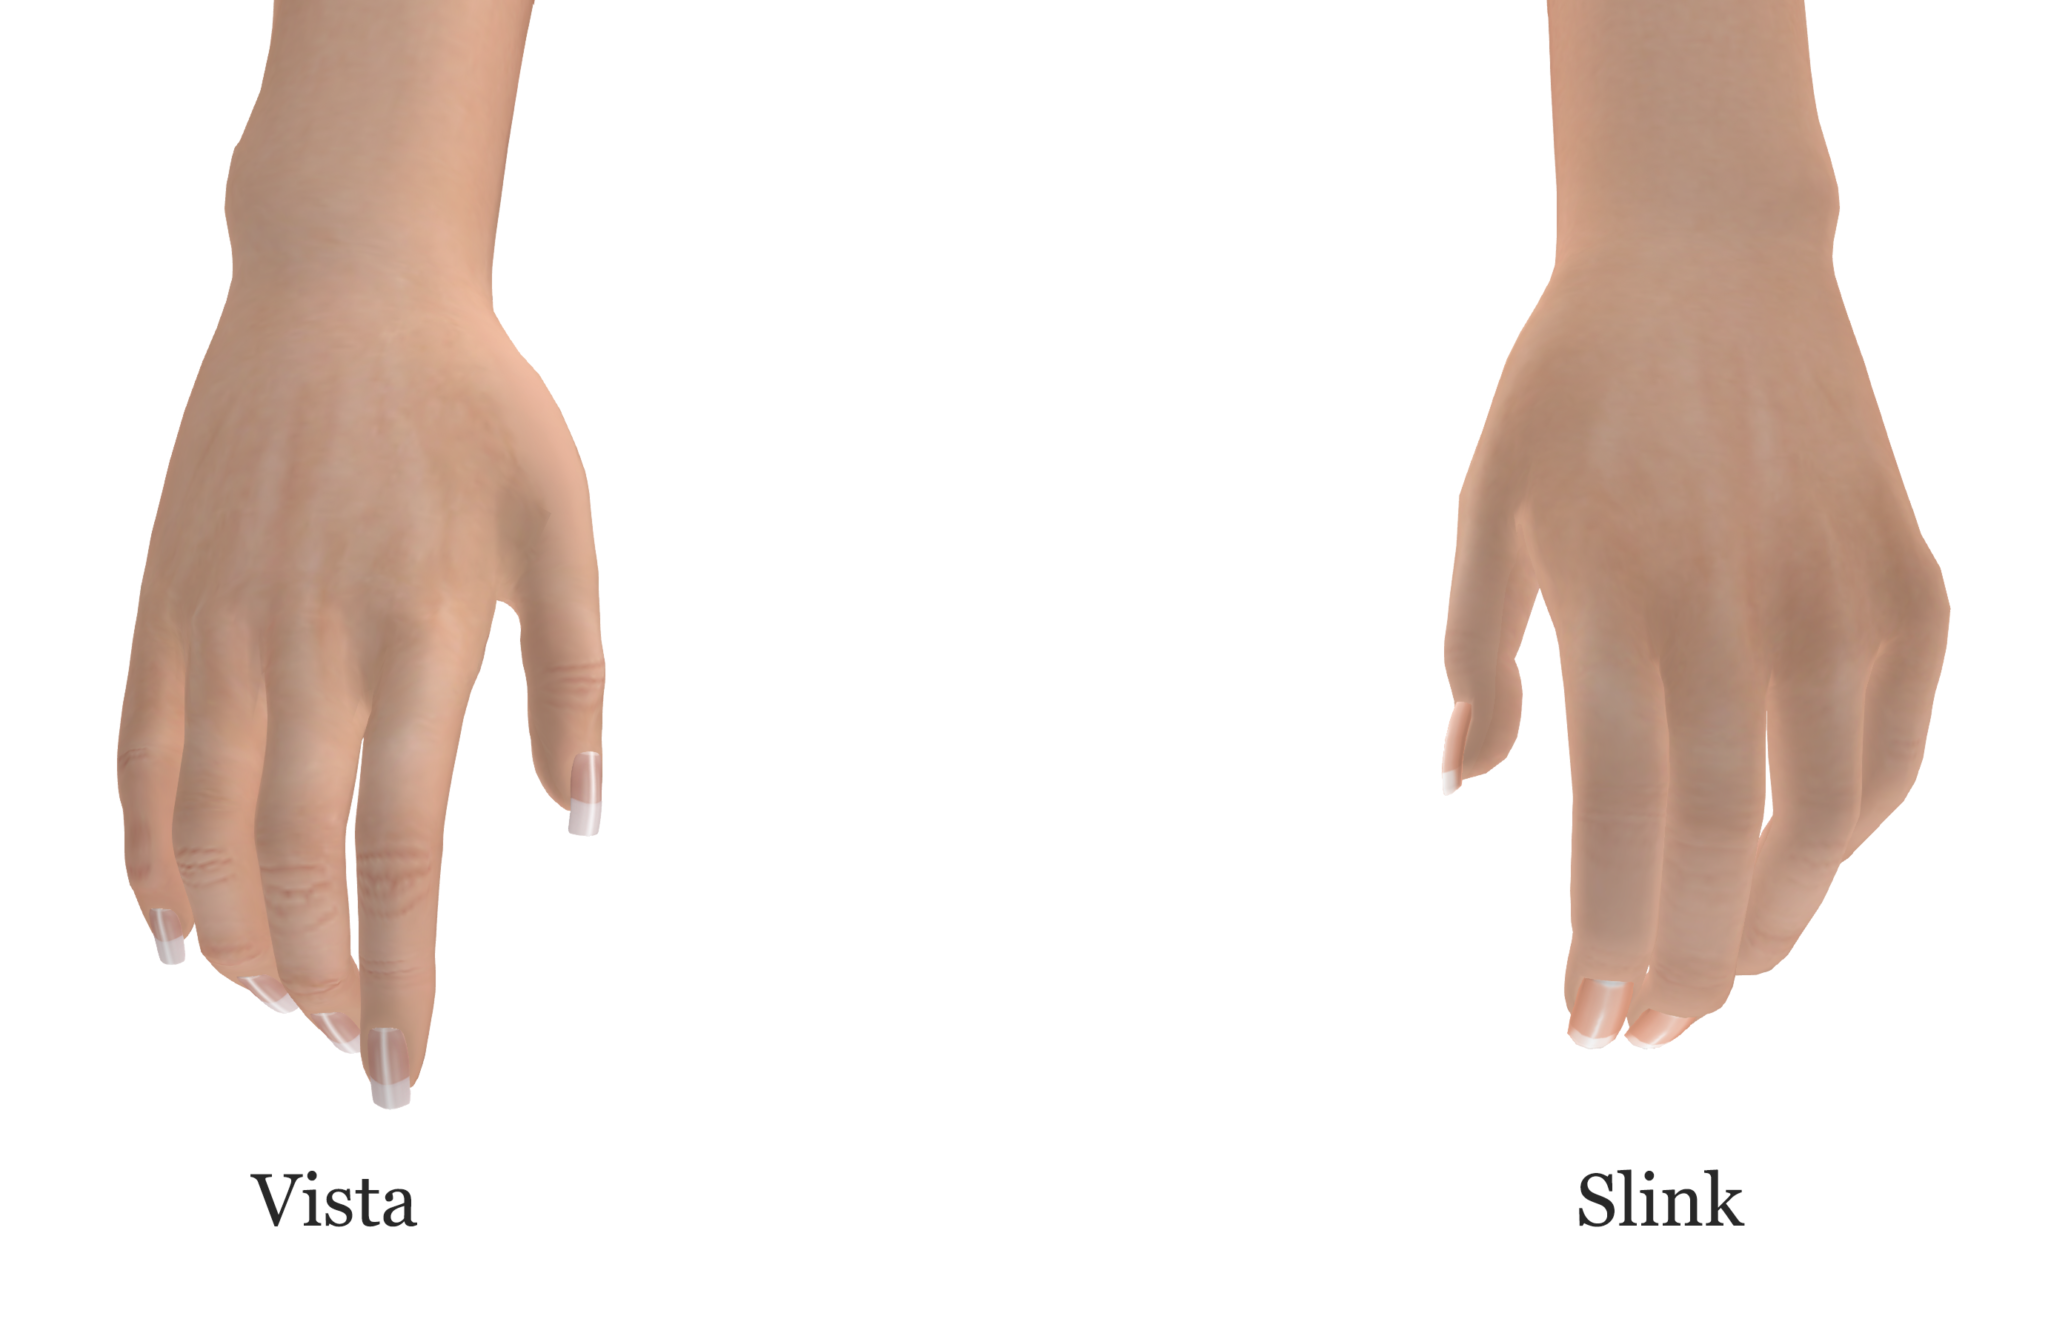 Slink dynamic hands and vista prohands, aka slink bento hands and vista bento hands